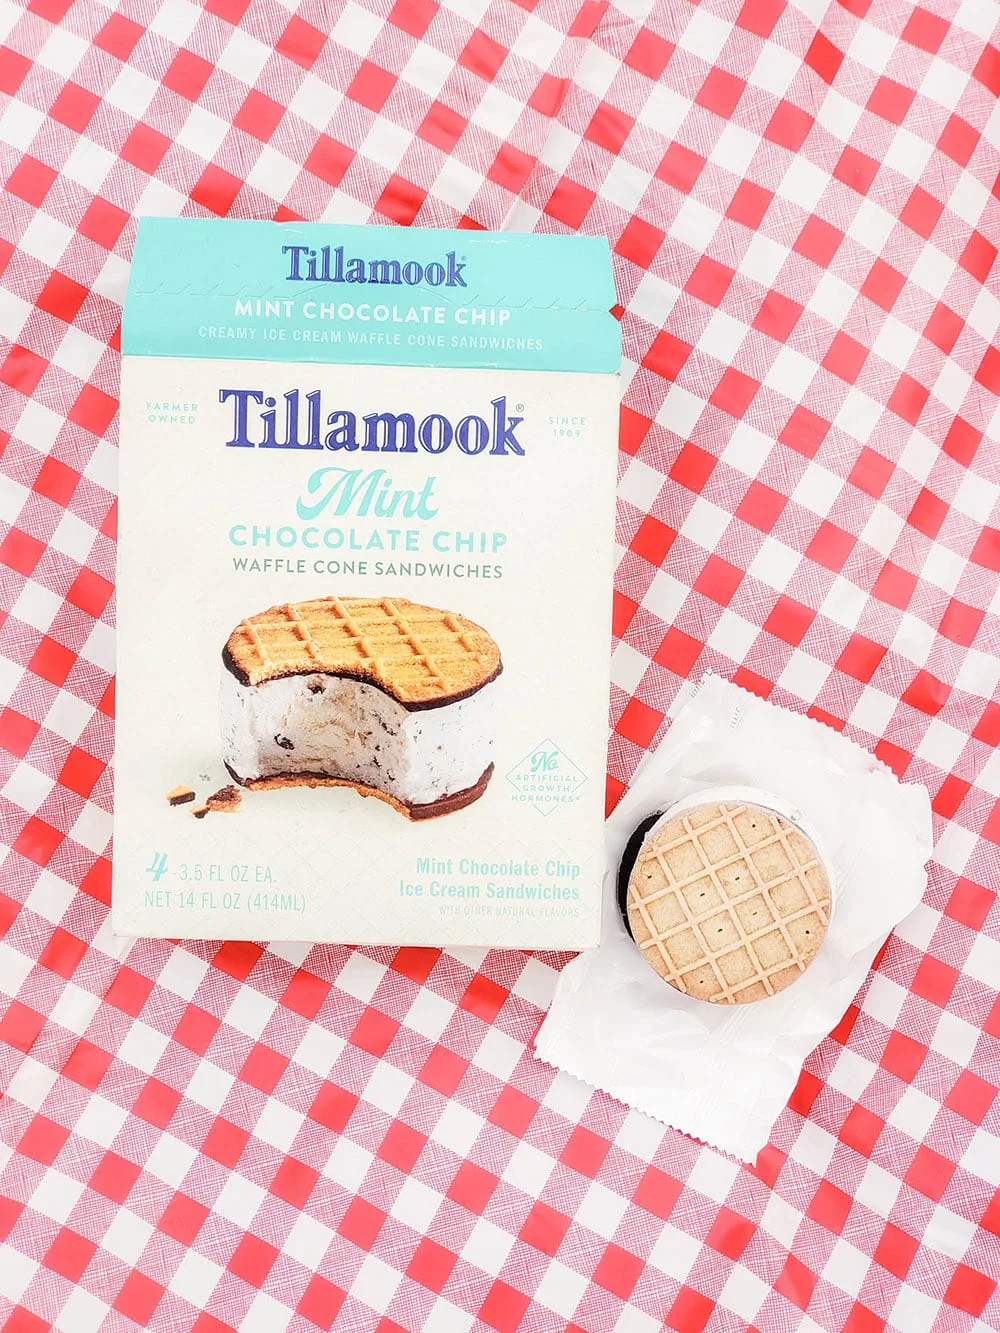 Tillamook Ice Cream sandwiches on a picnic blanket. 